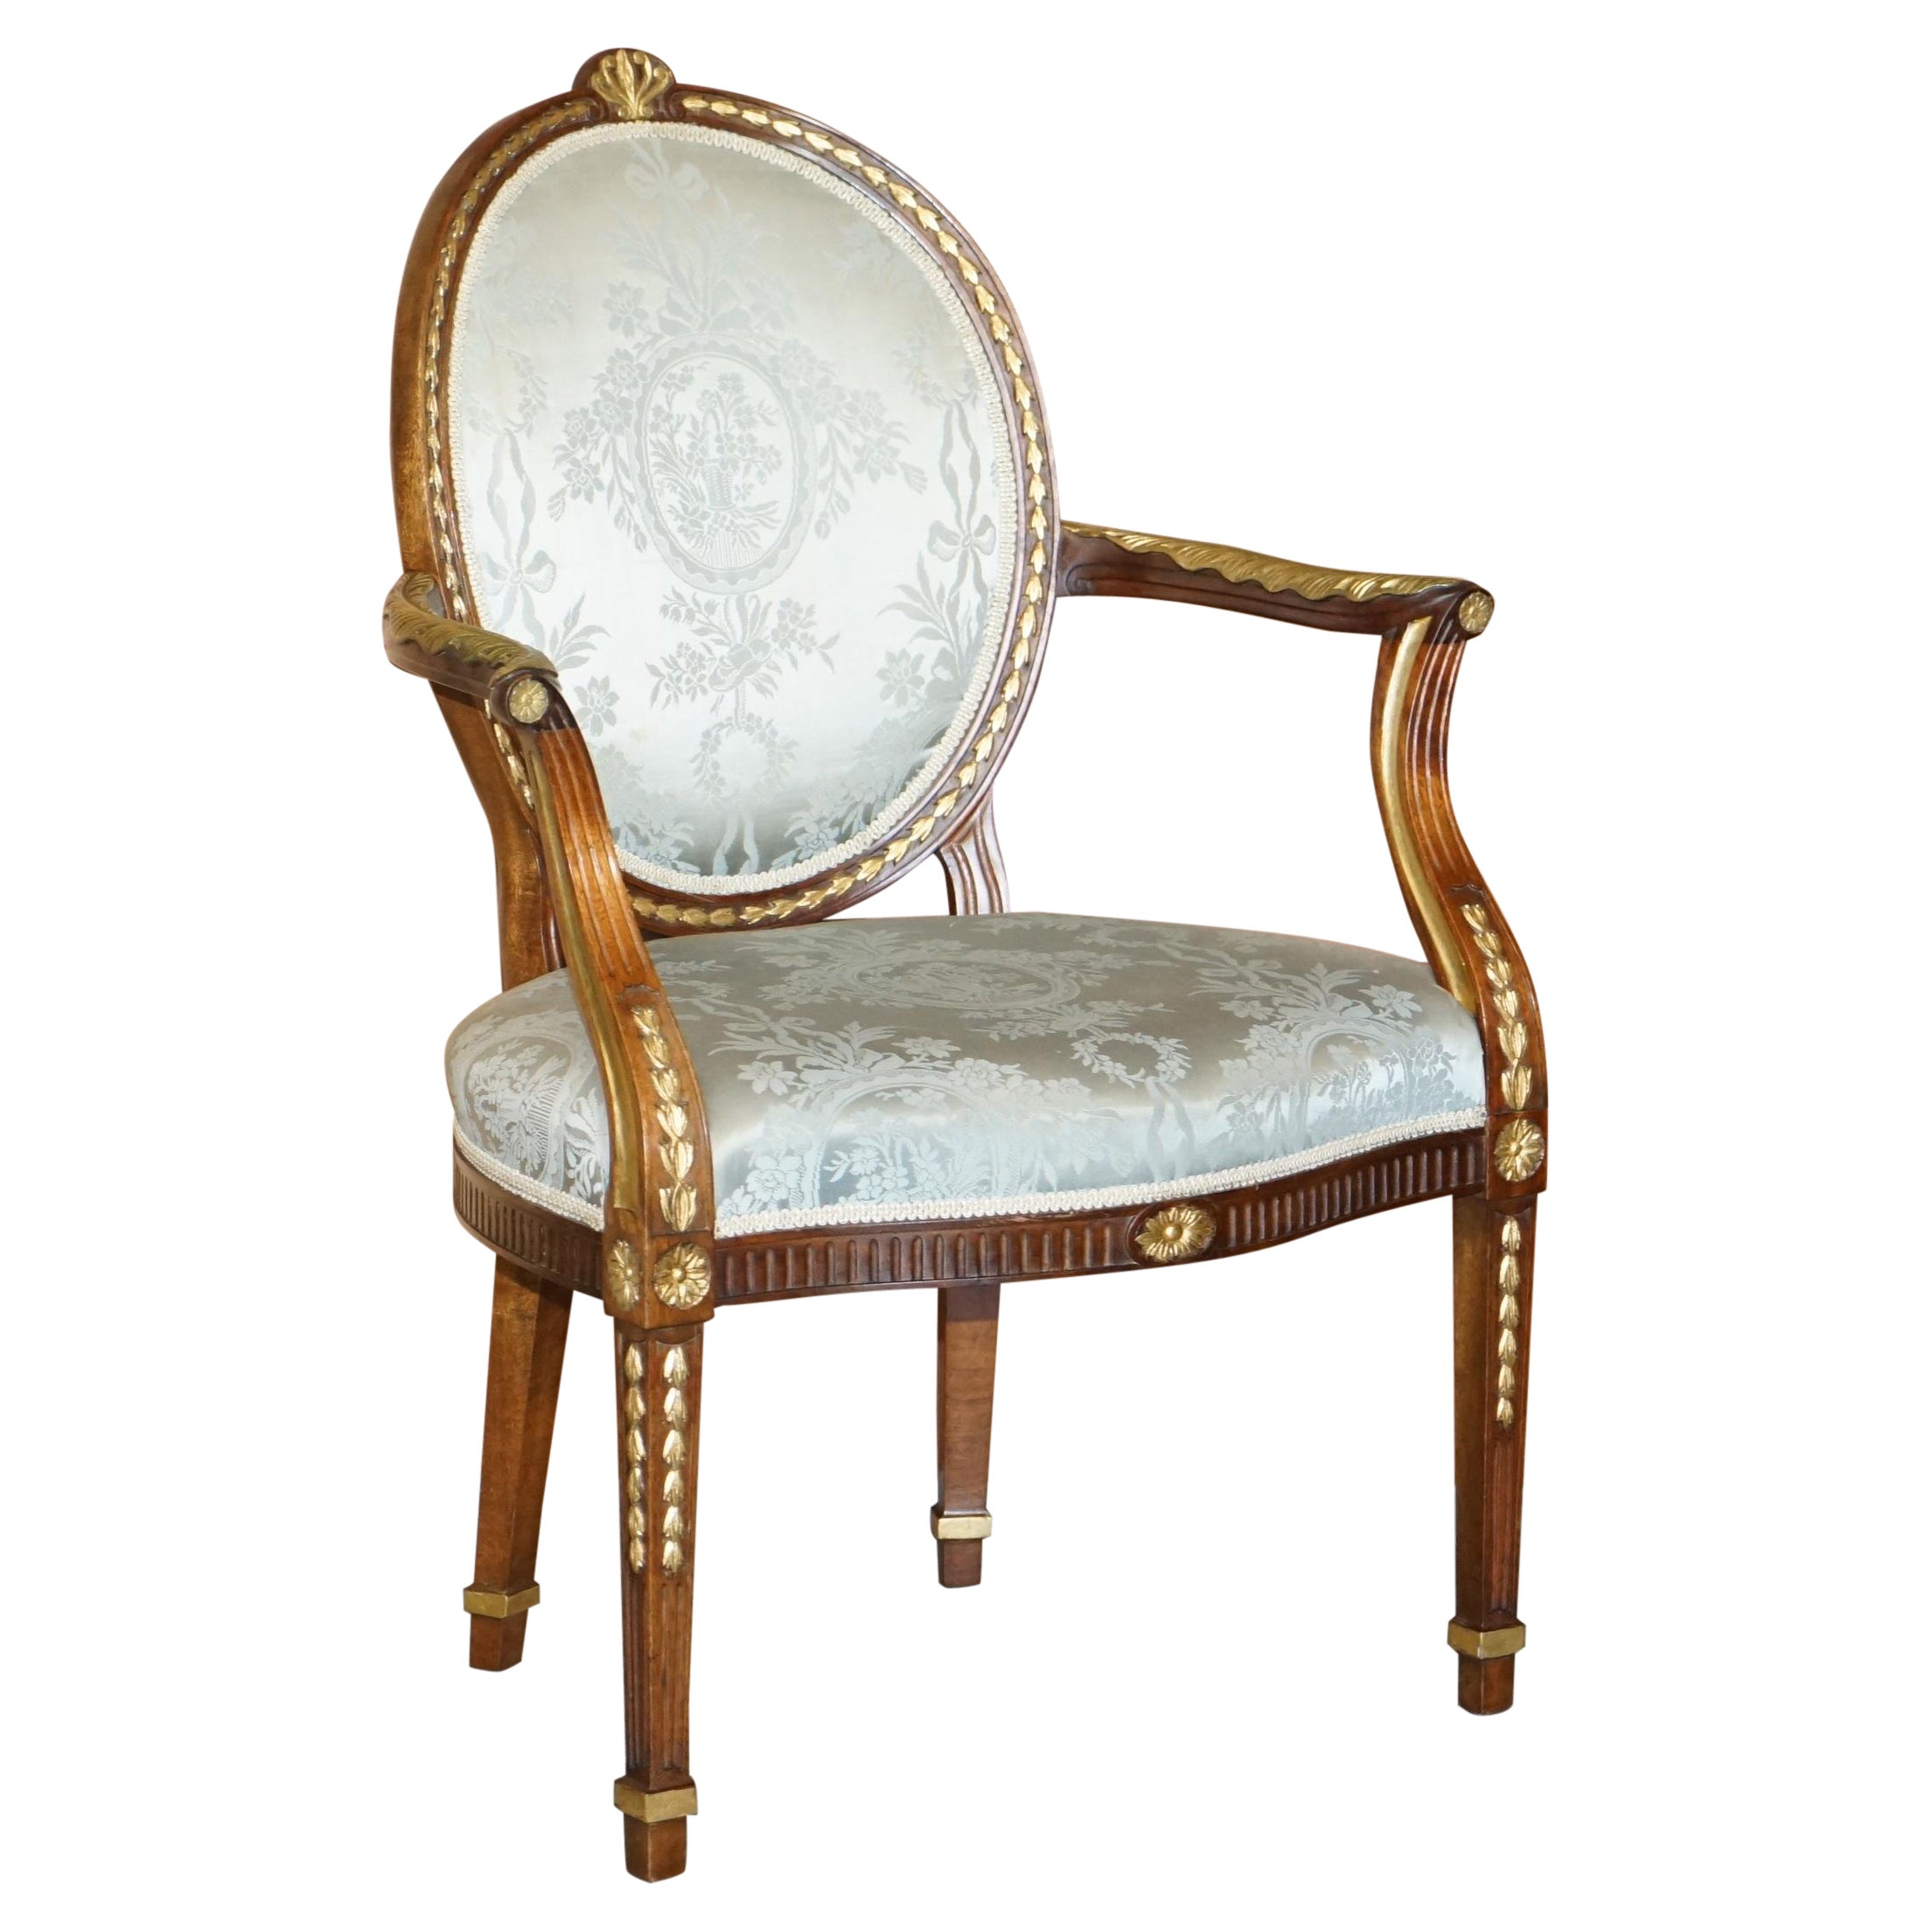 Stunning circa 1900 George Hepplewhite Style Hardwood Giltwood Georgian Armchair For Sale